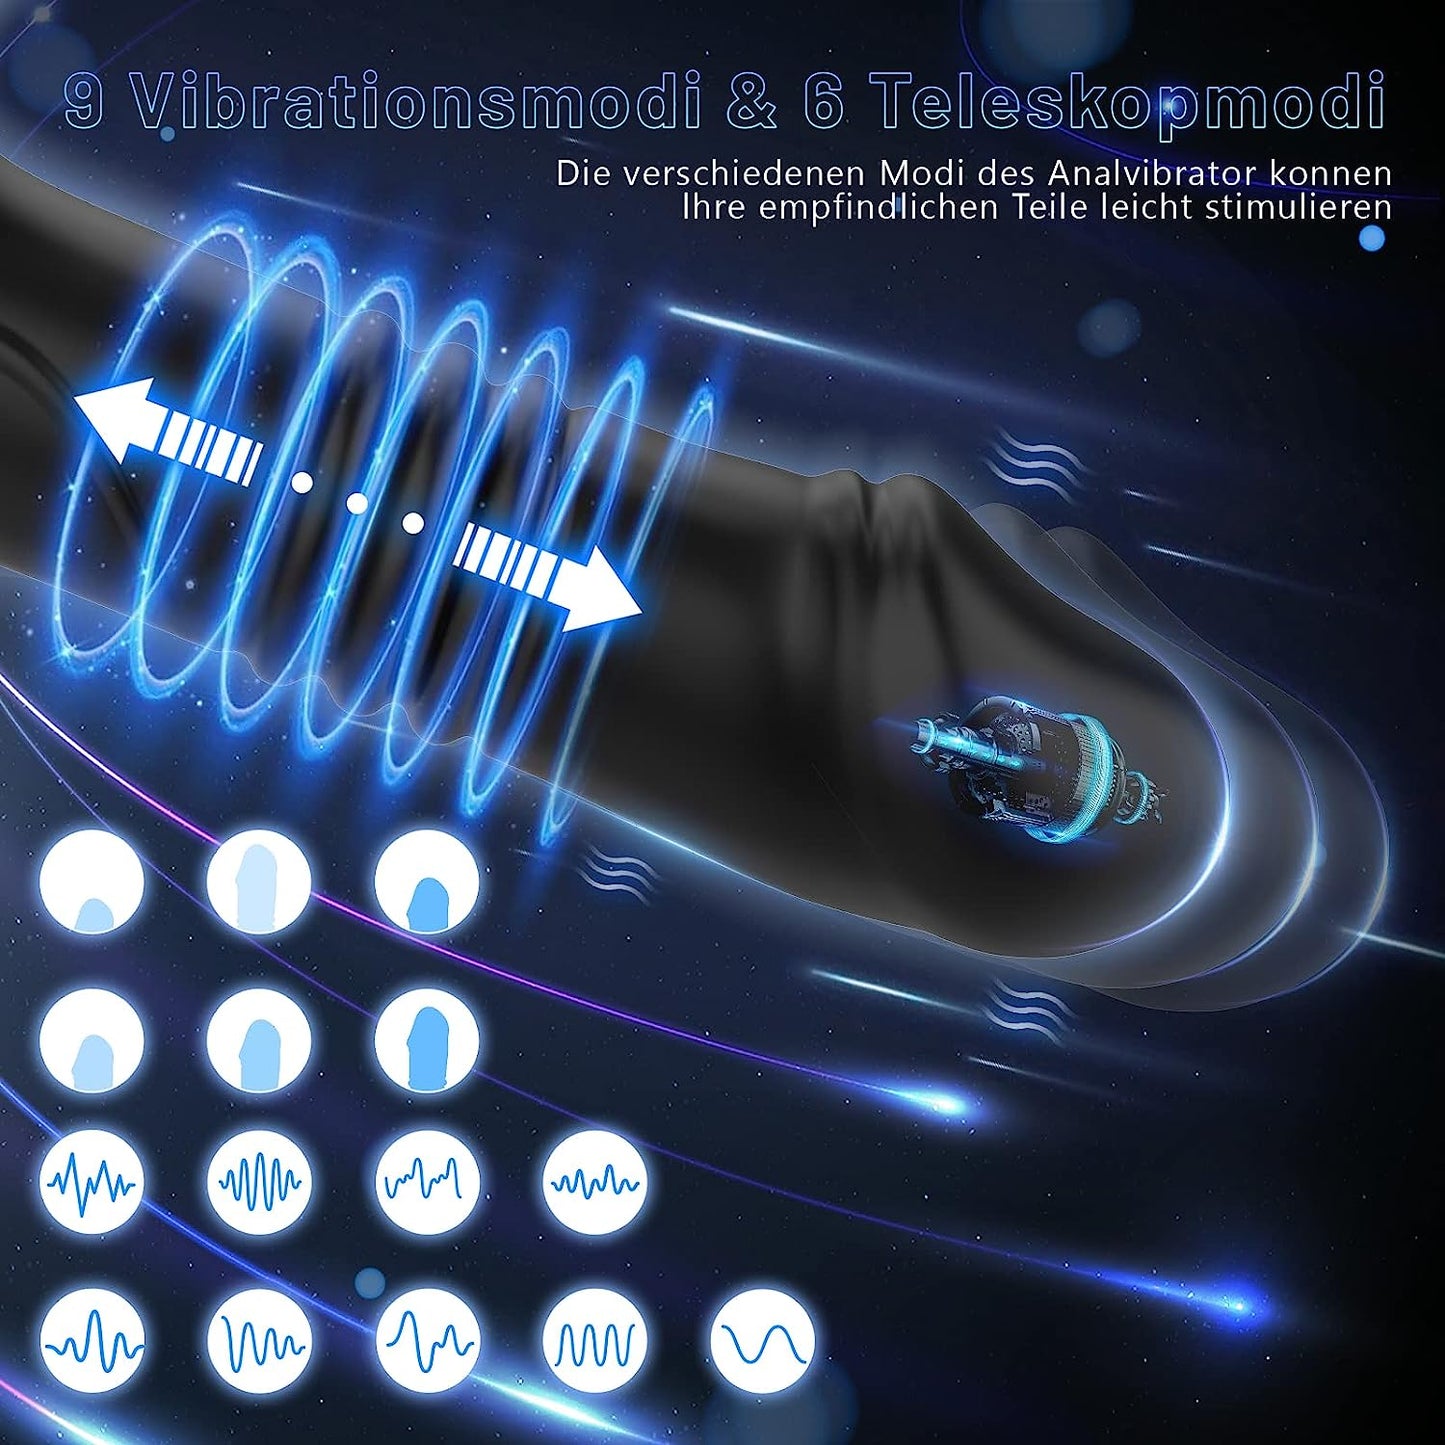 6 Teleskopmodi 9 Vibrationsmodi App Analvibratoren groß mit stoßfunktion Prostata Vibrator